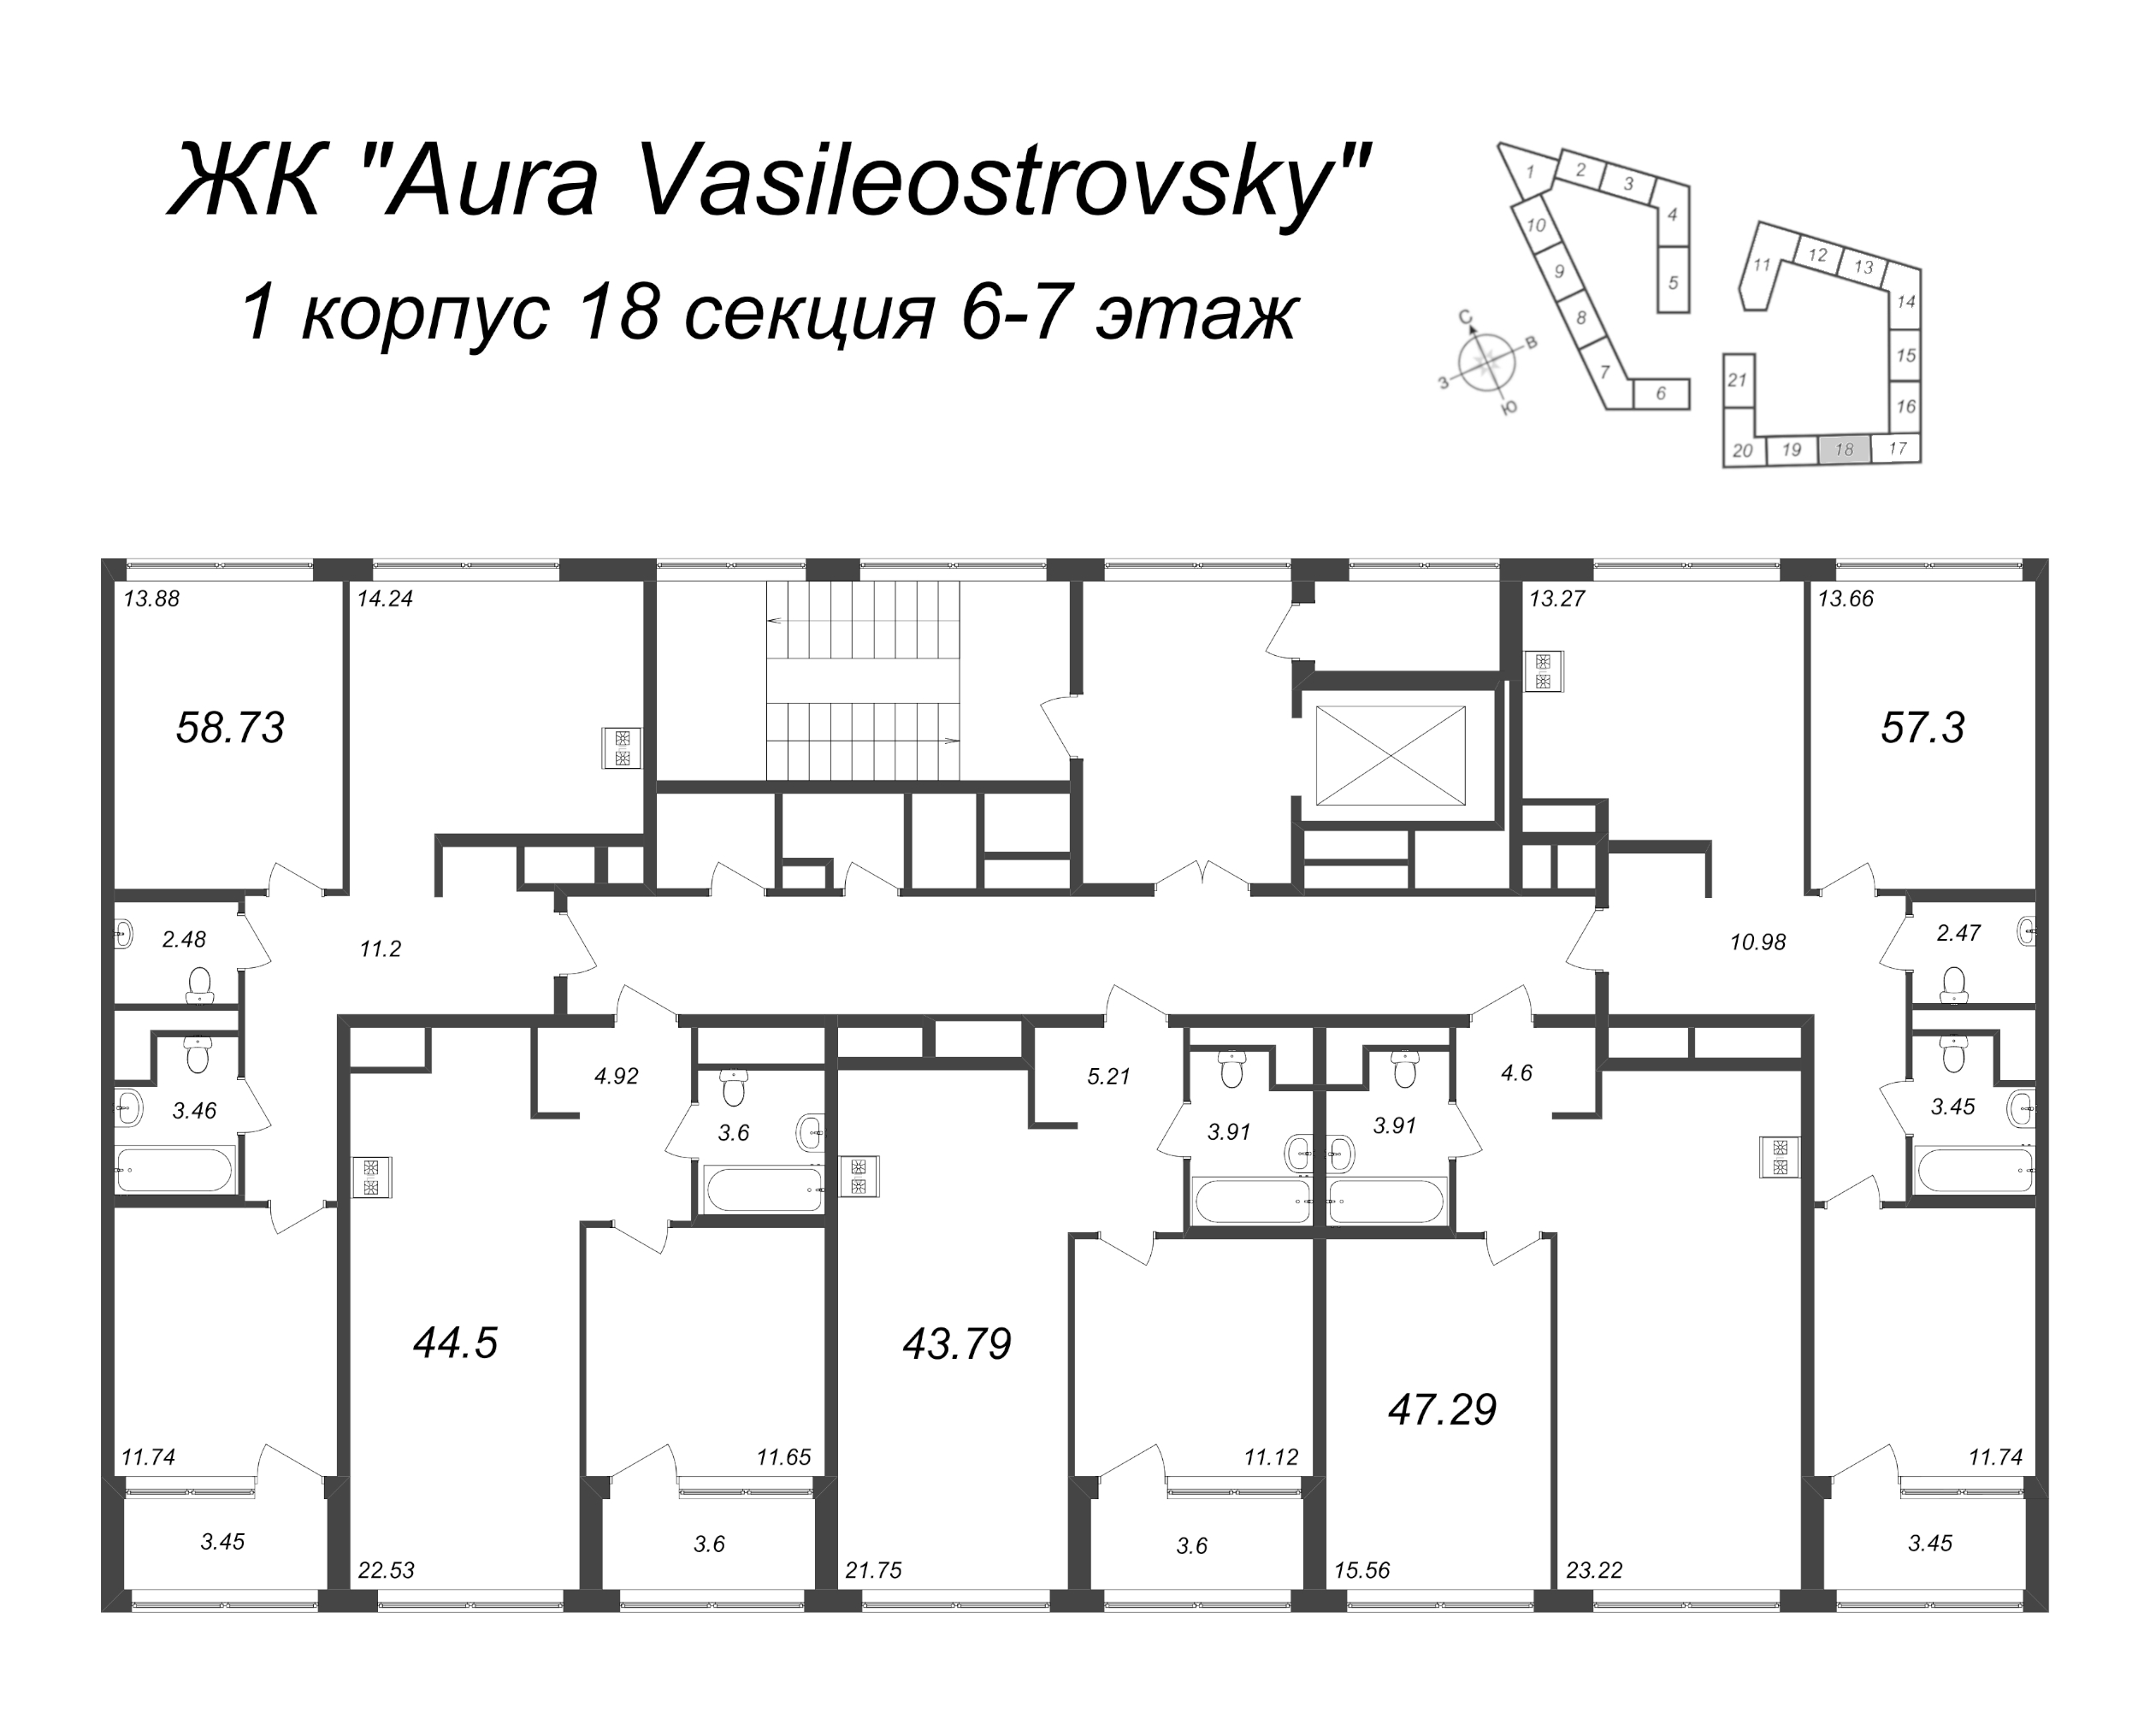 2-комнатная (Евро) квартира, 47.29 м² - планировка этажа